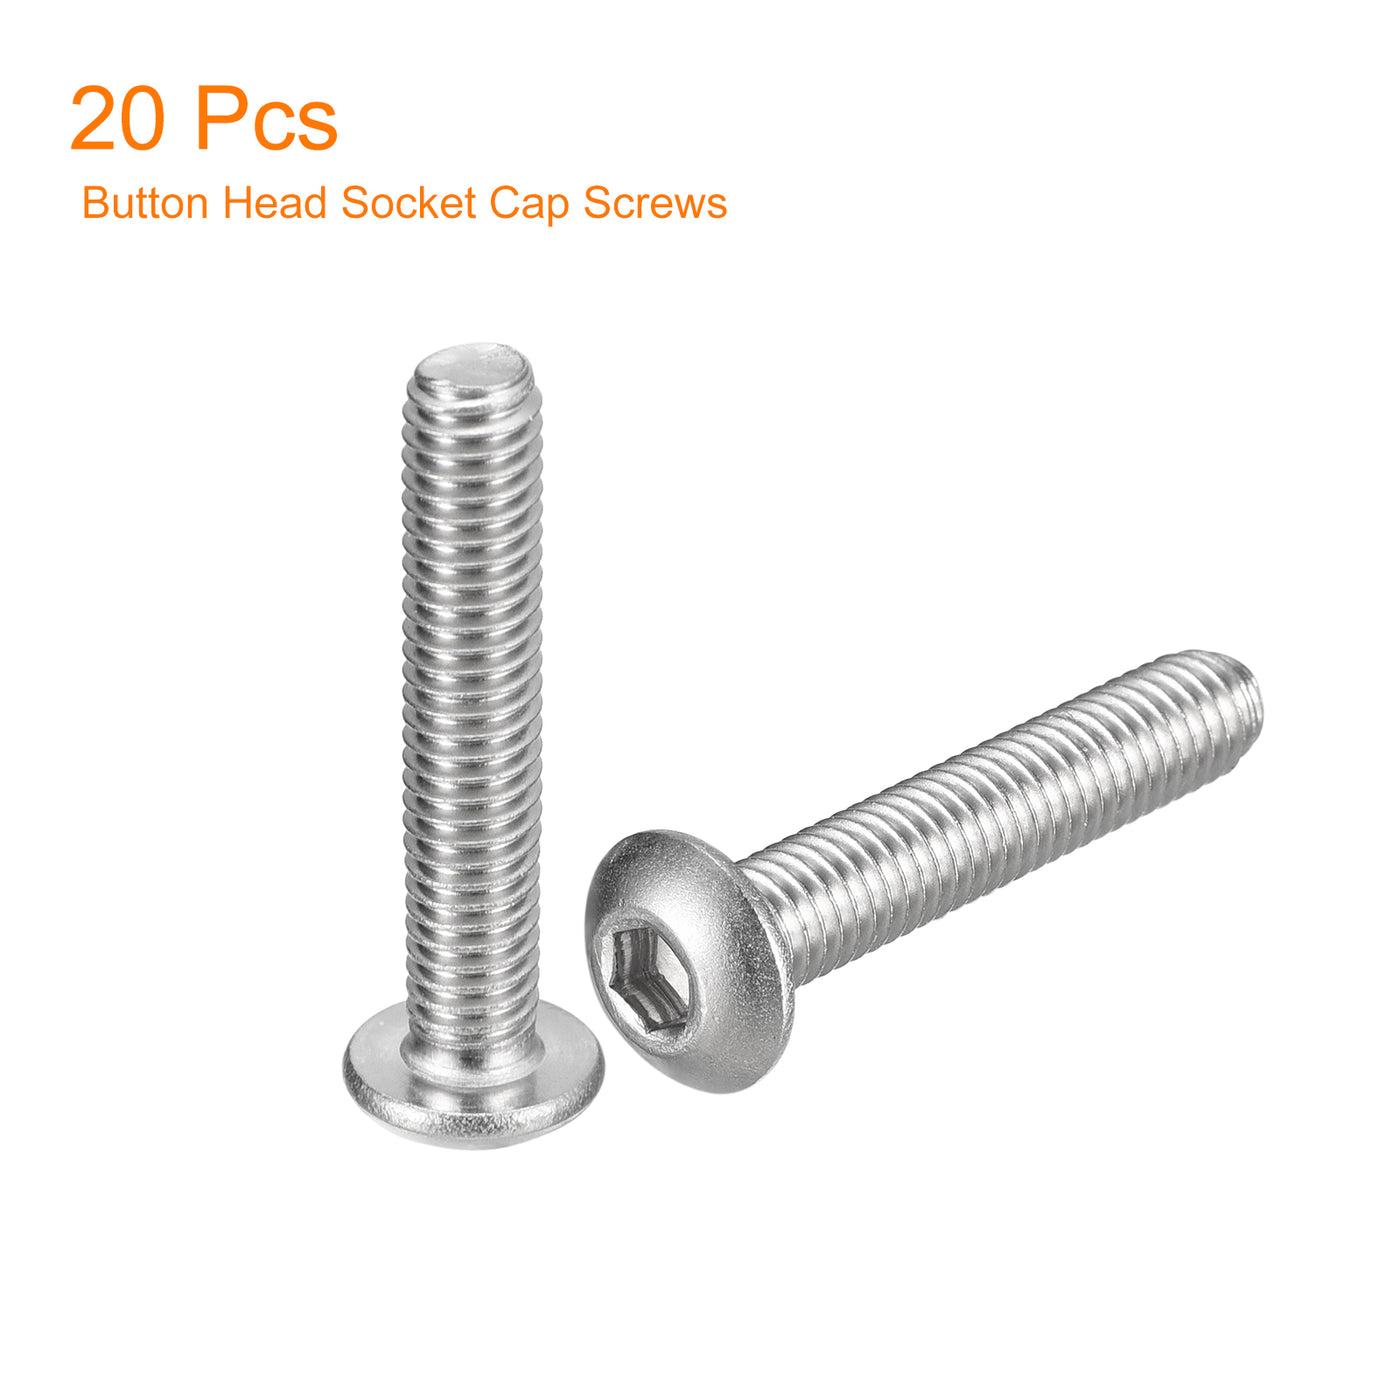 uxcell Uxcell #10-32x1" Button Head Socket Cap Screws, 20pcs 304 Stainless Steel Screws